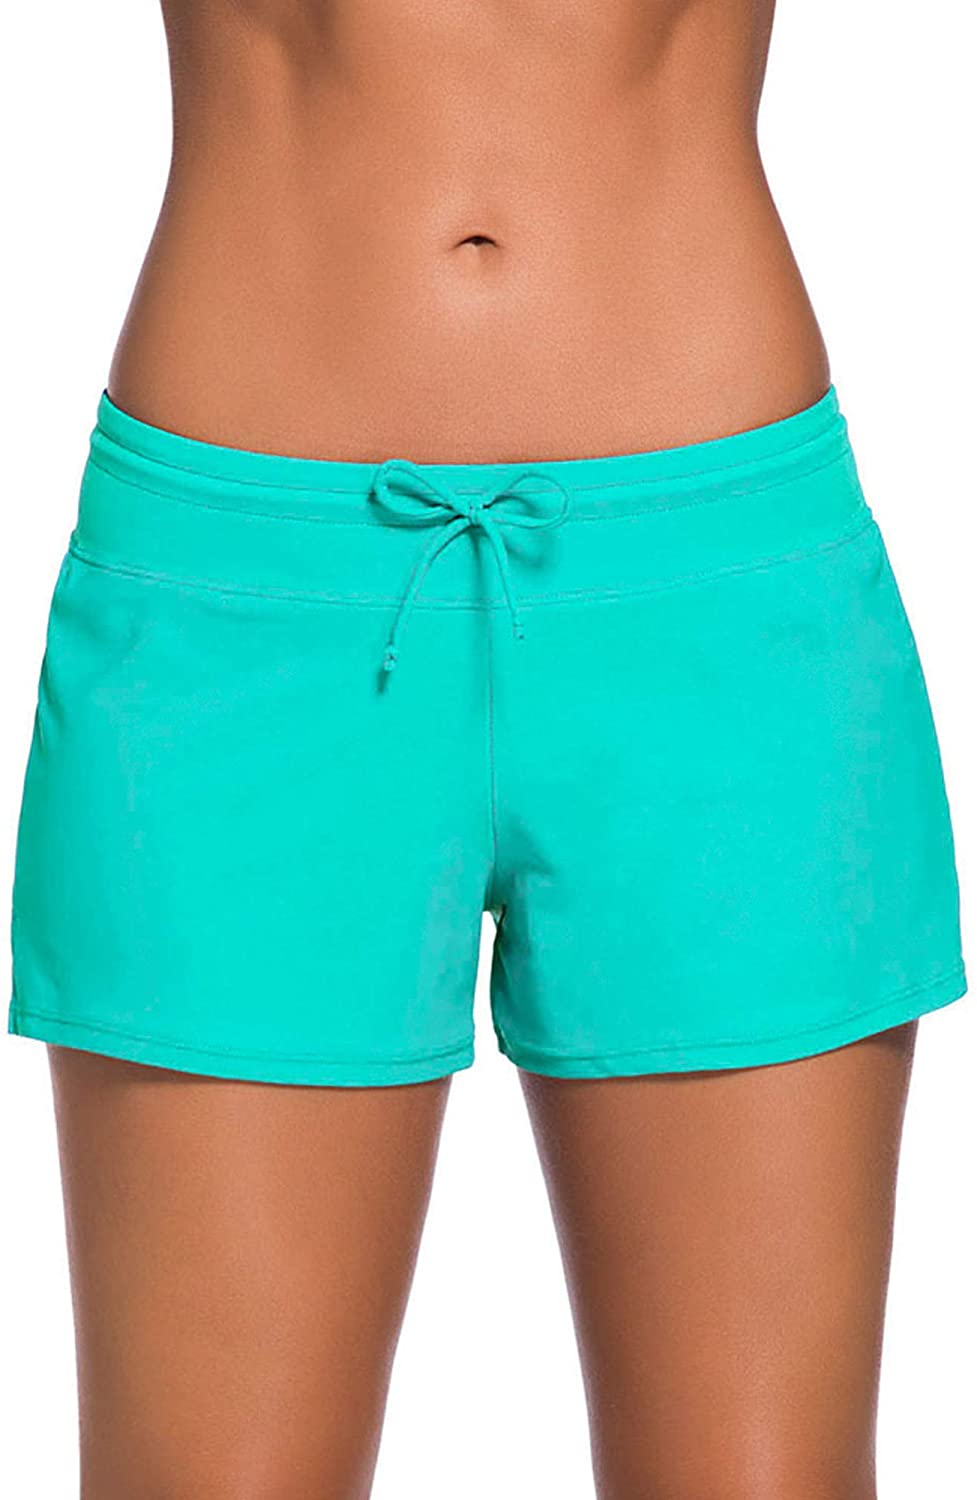 Satinior Women Swimsuit Shorts Tankini Swim Briefs Plus Size Green Size 3 0 Dx 652811850963 Ebay